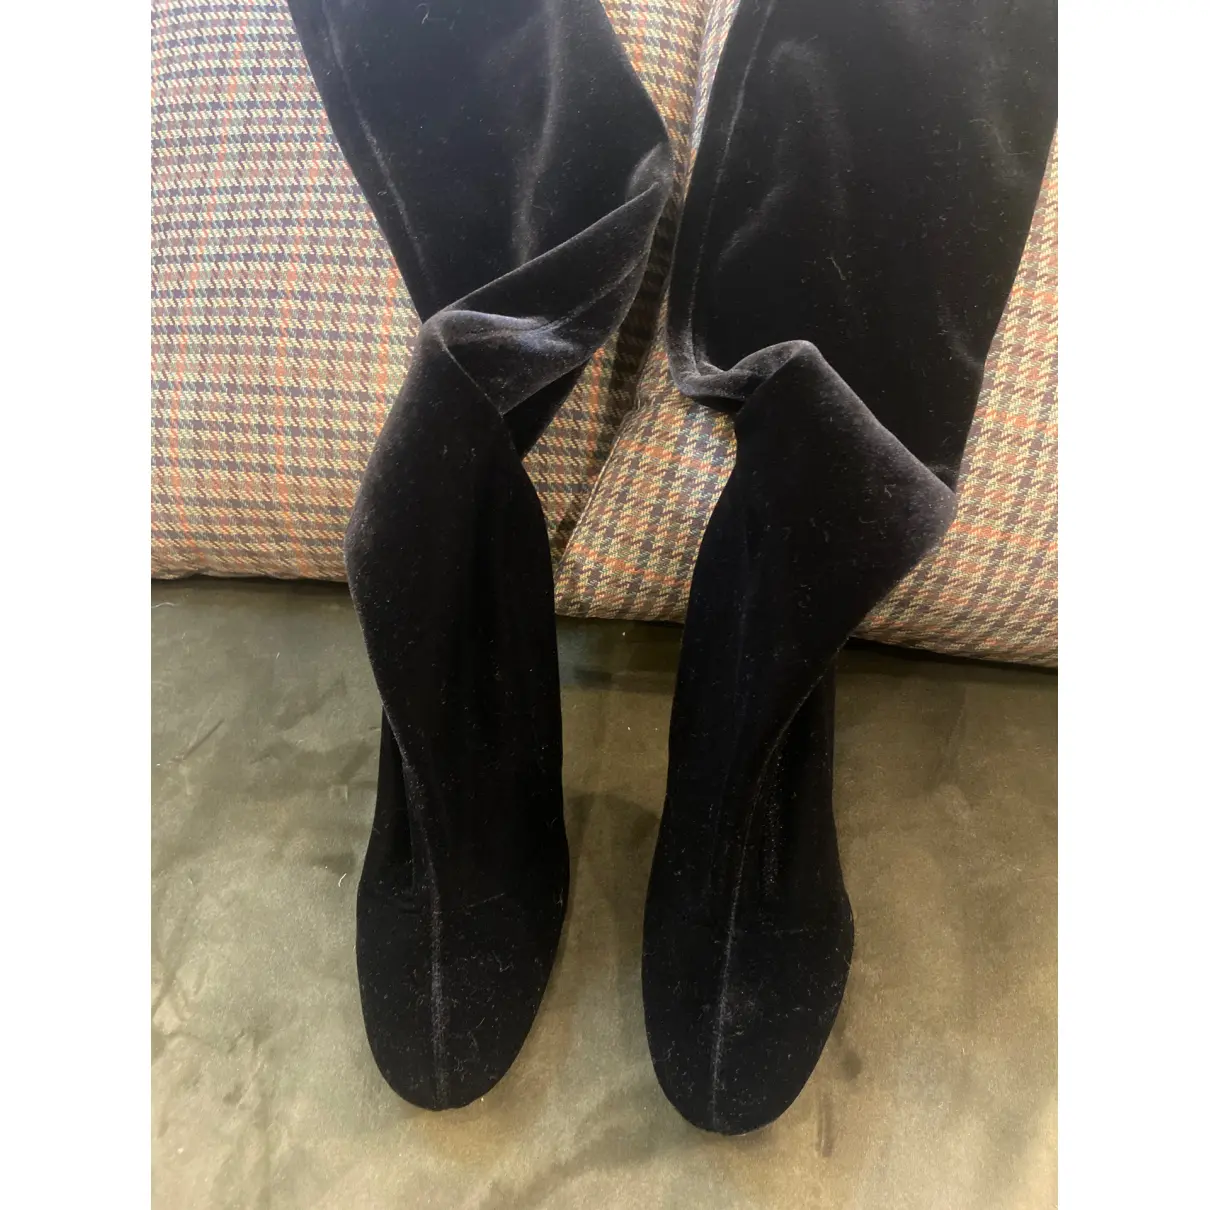 Buy Carolina Herrera Velvet riding boots online